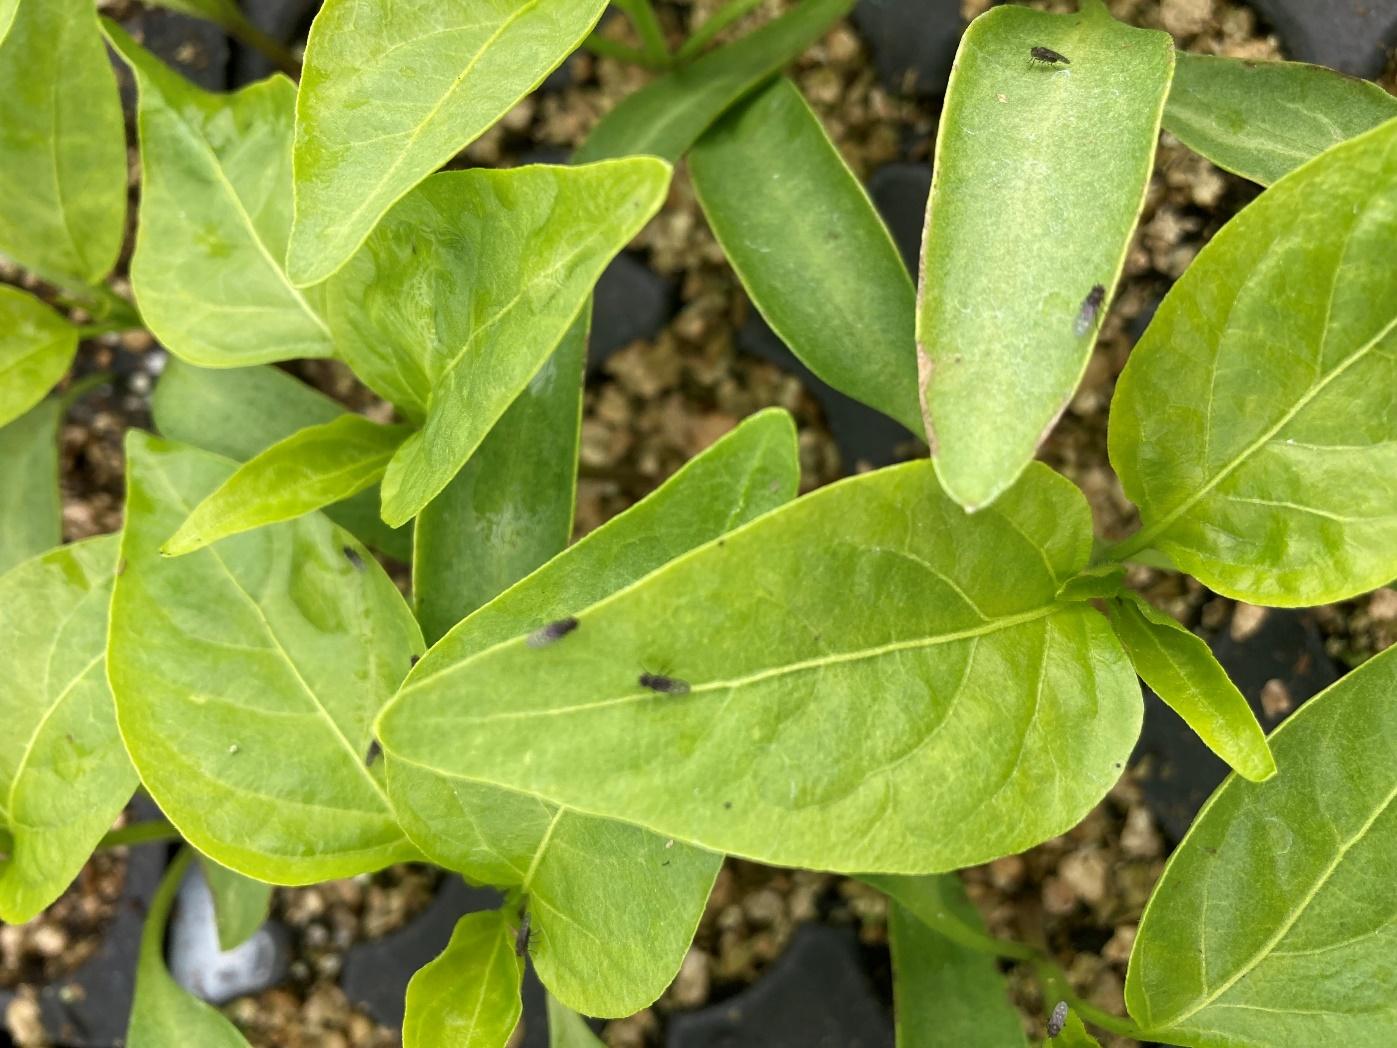 Adult shore flies resting on a pepper leaf.